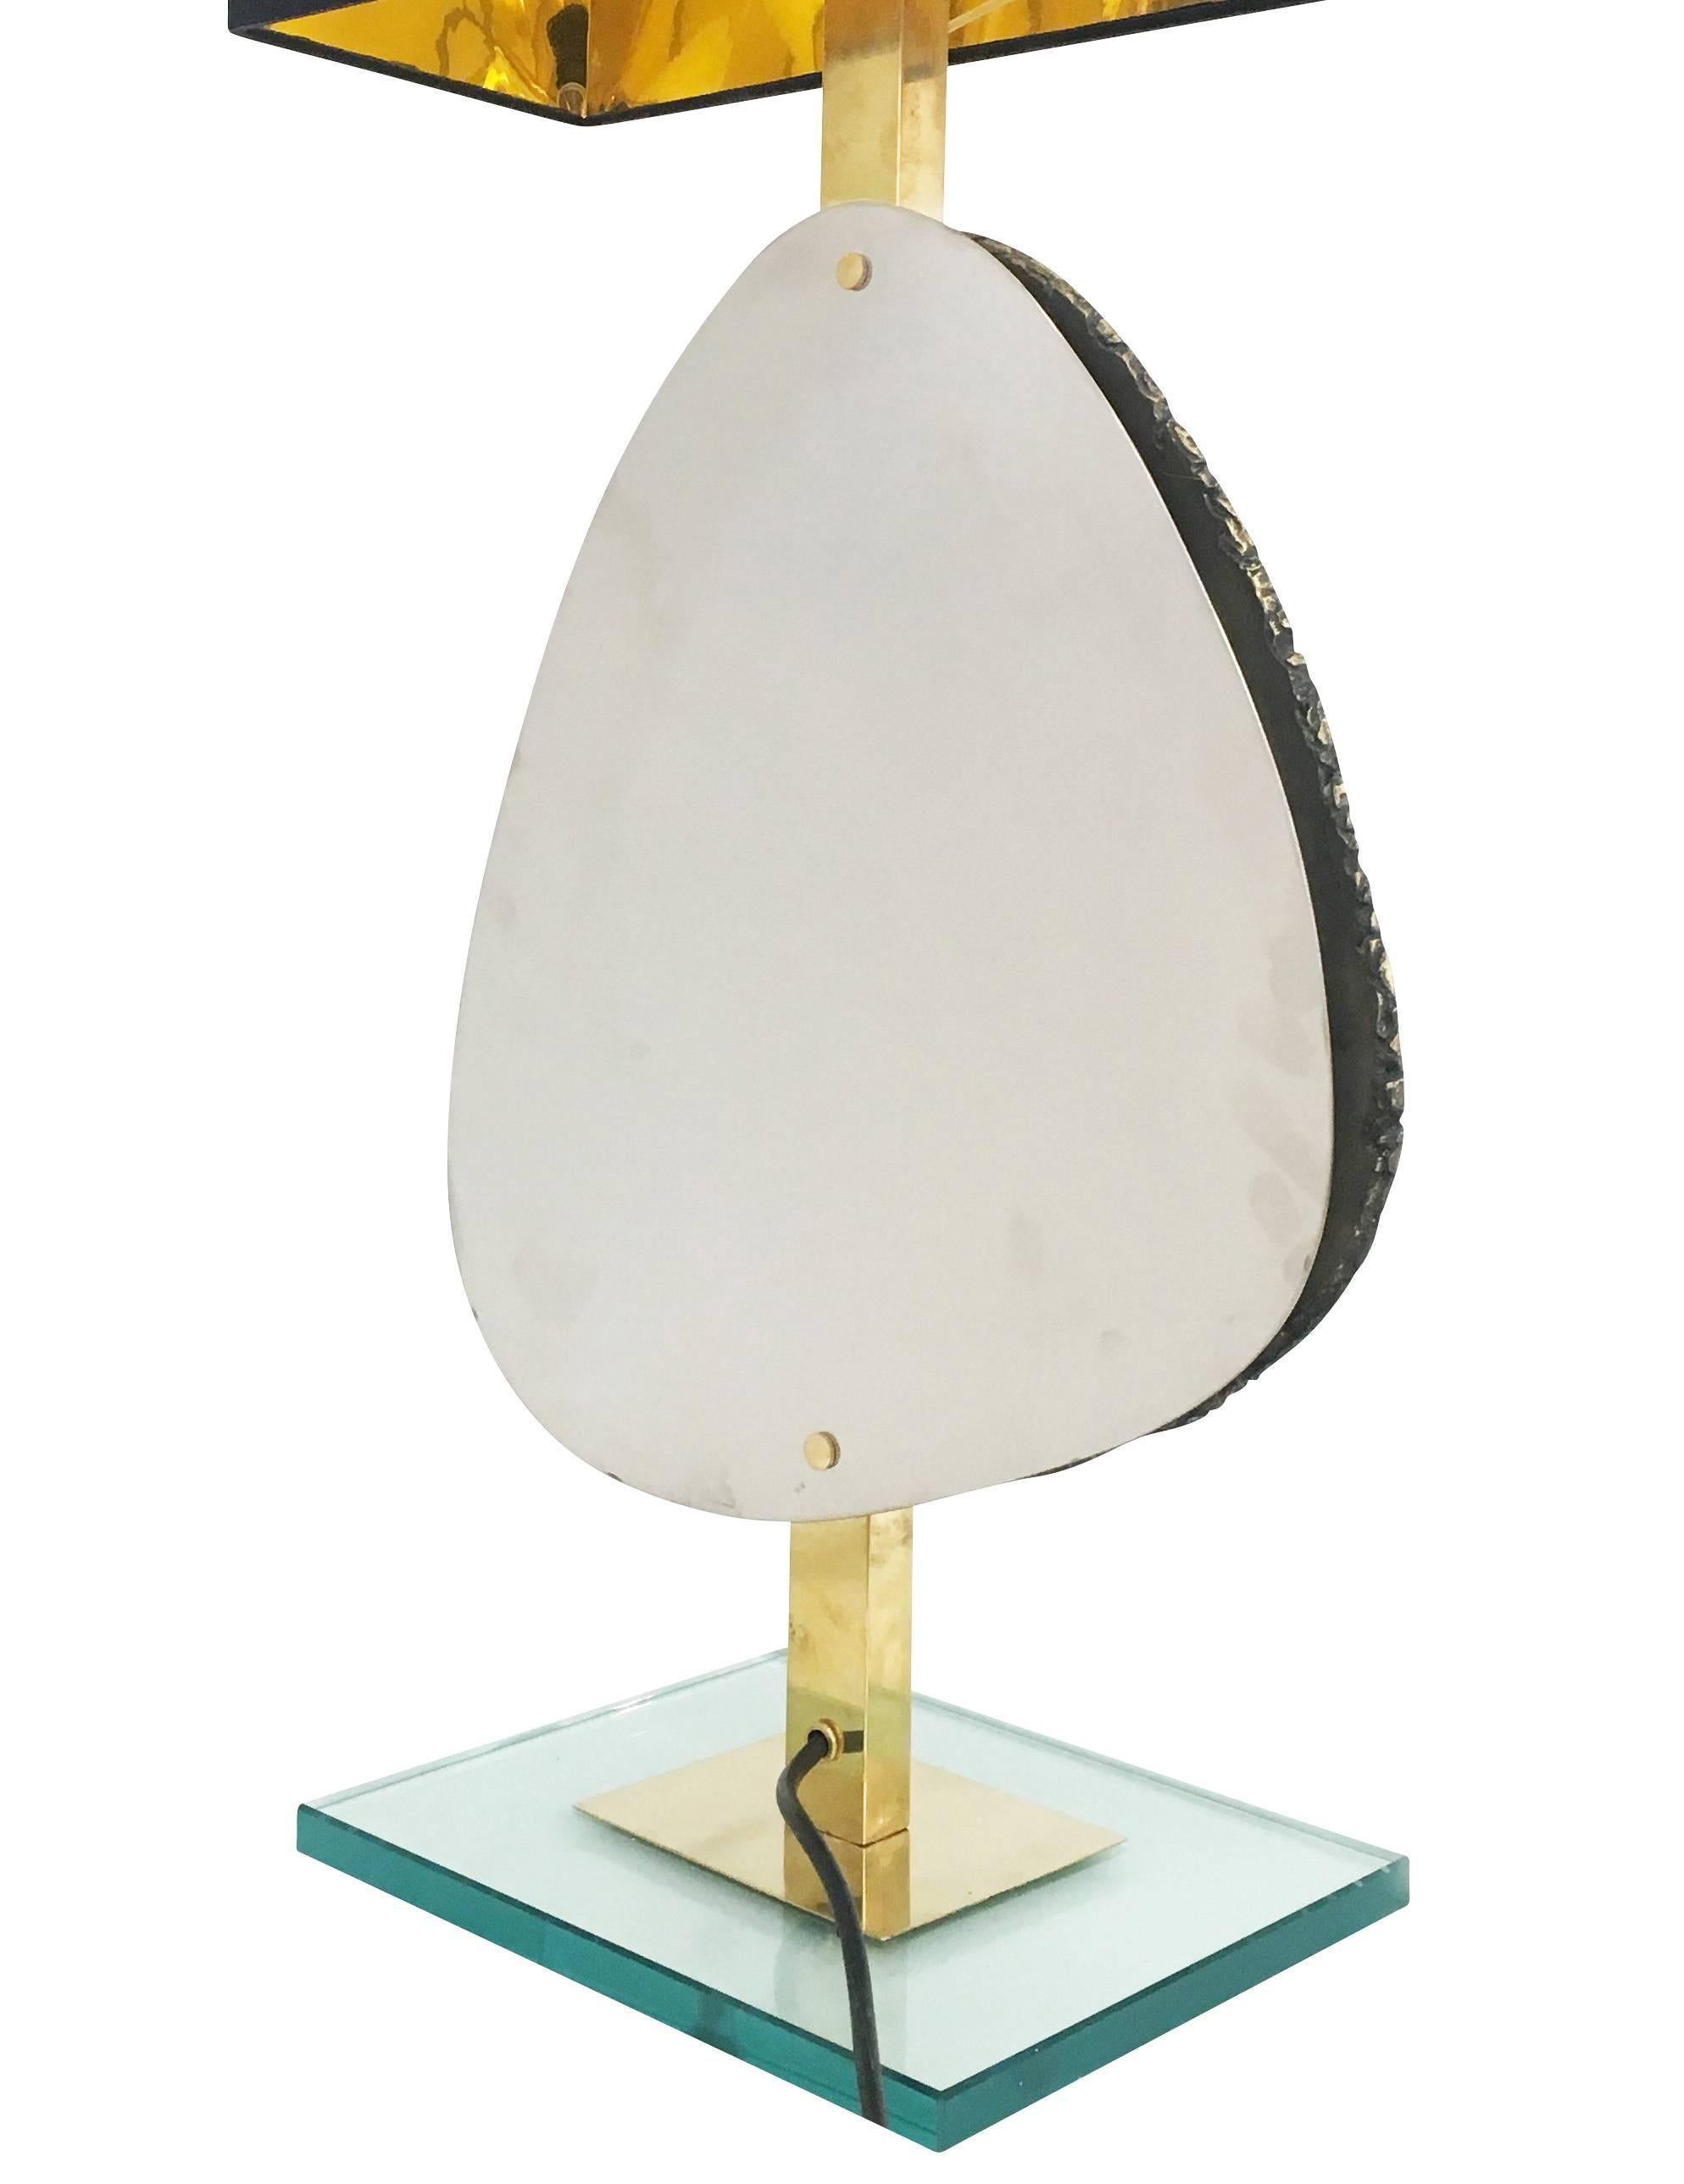 Italian Vuoto Table Lamp by Daniele Bottacin for Gaspare Asaro